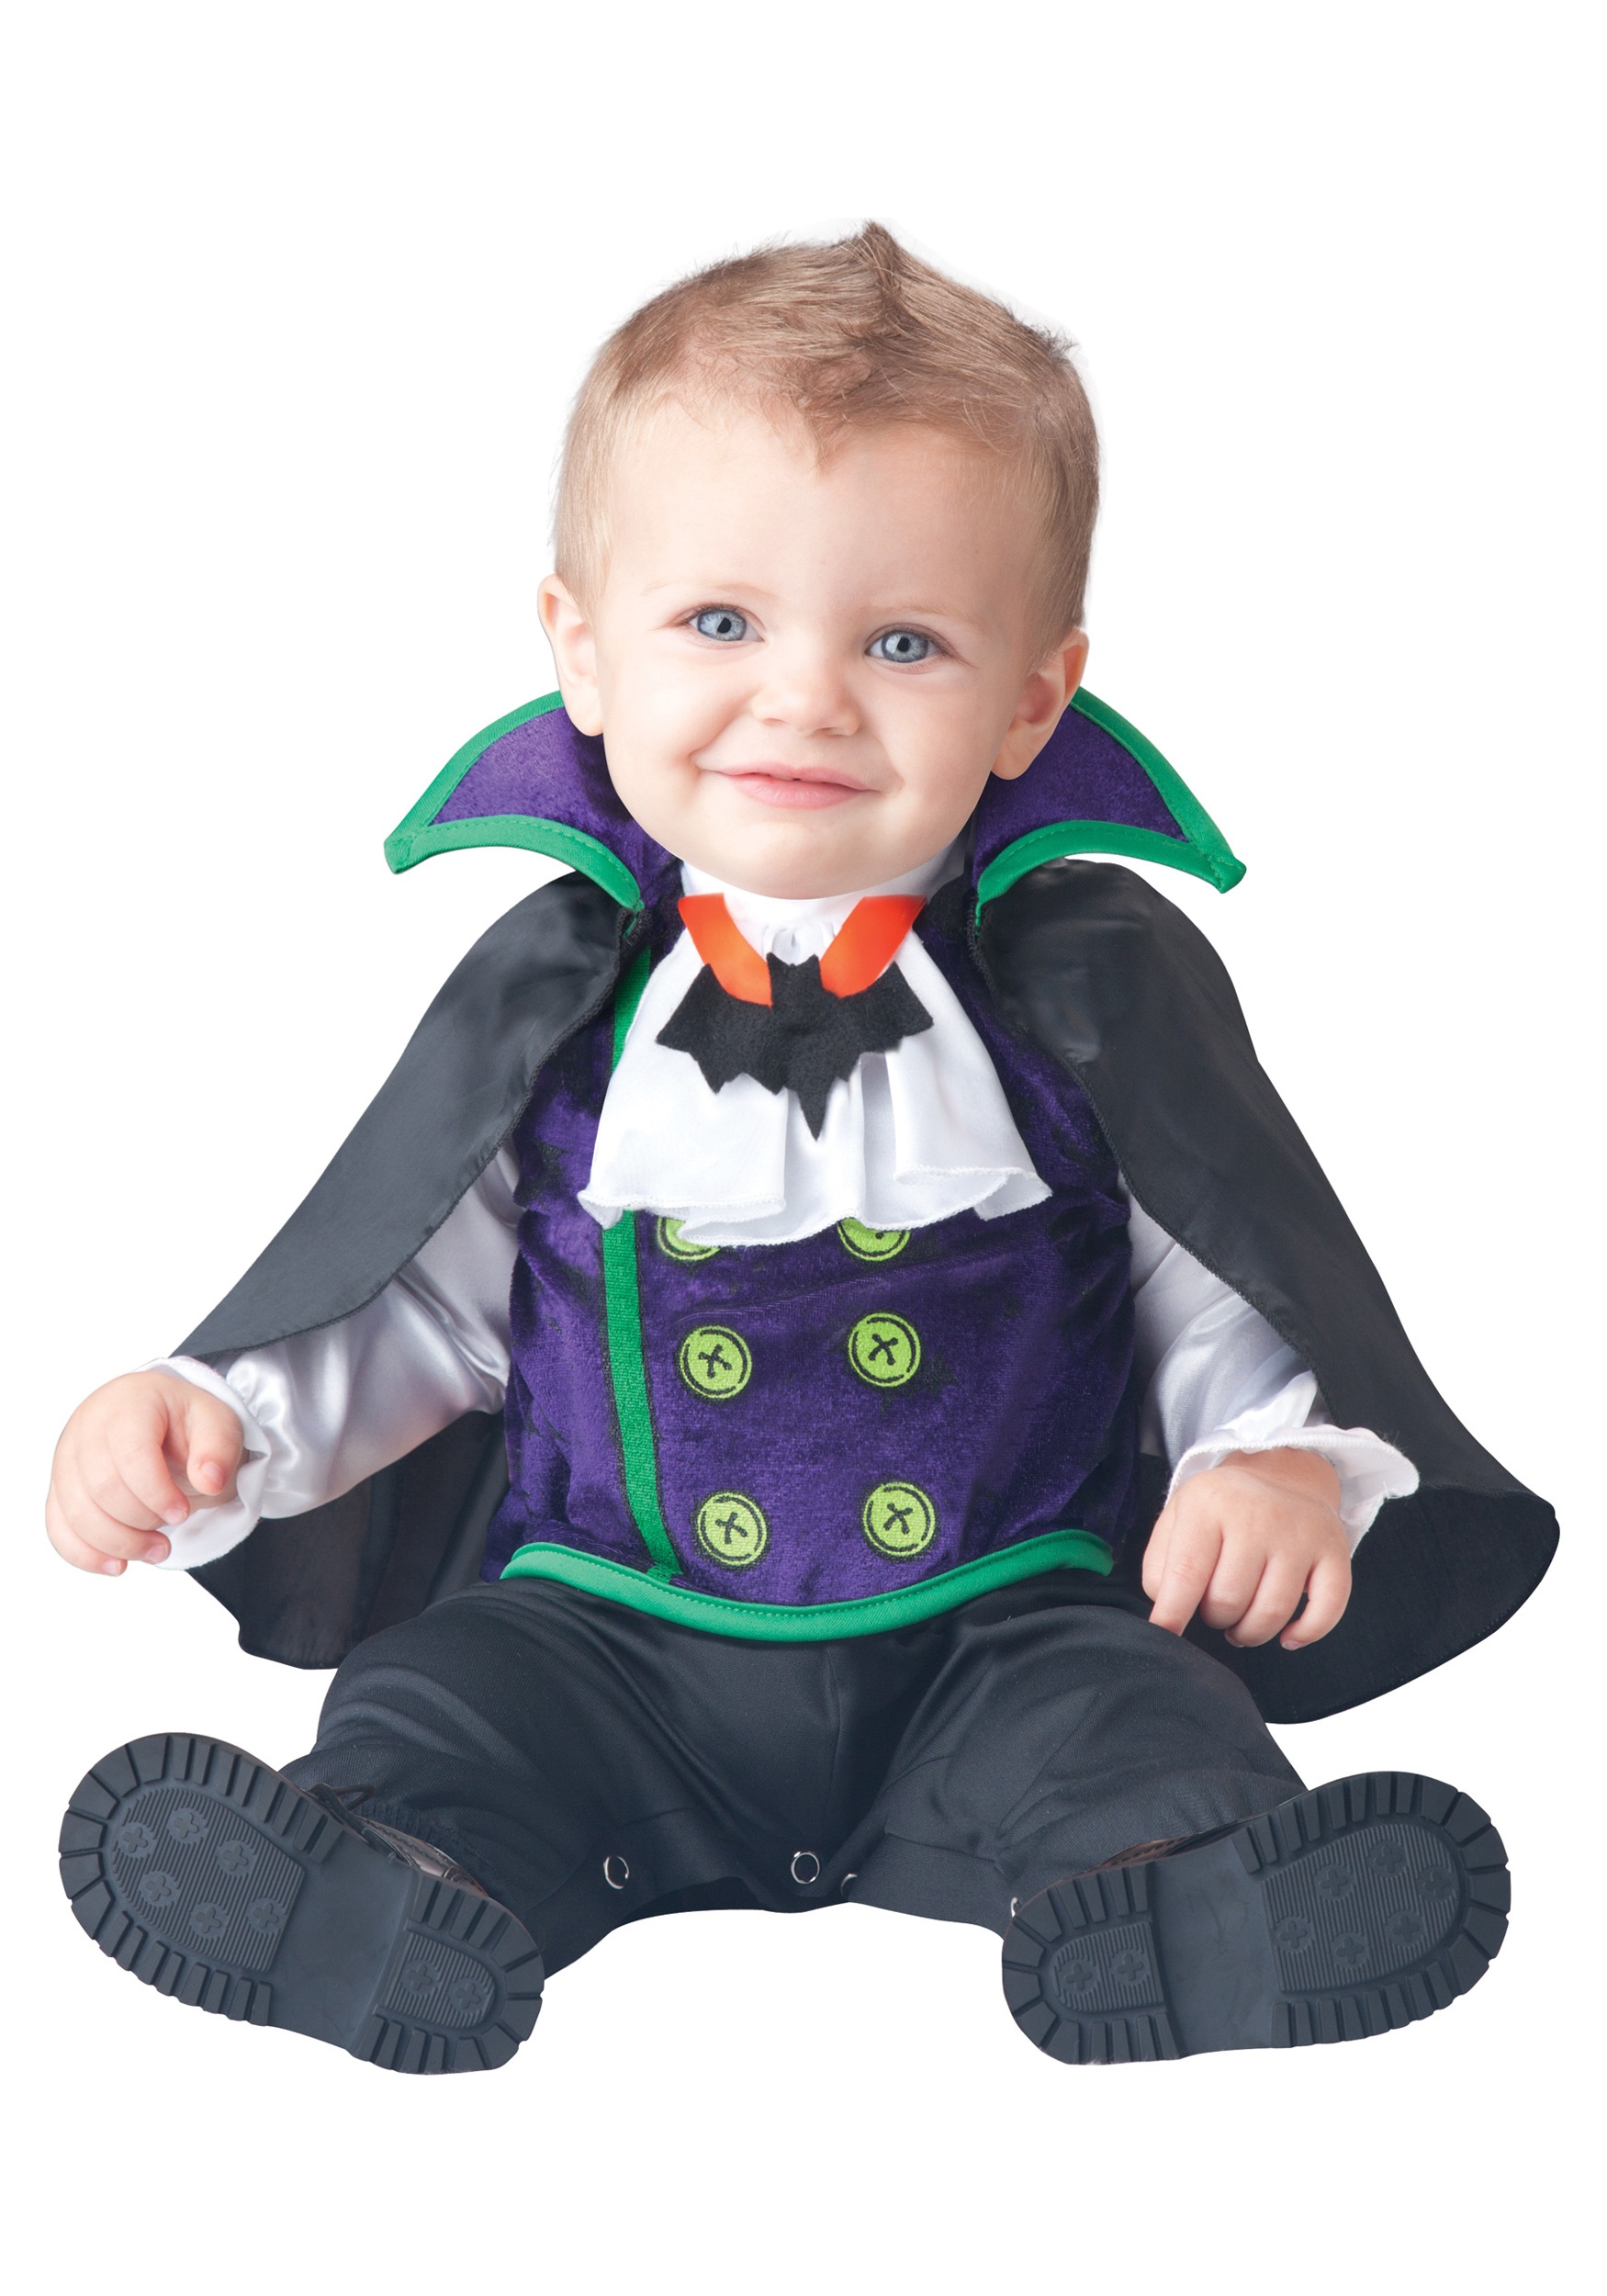 Count Cutie Infant Costume